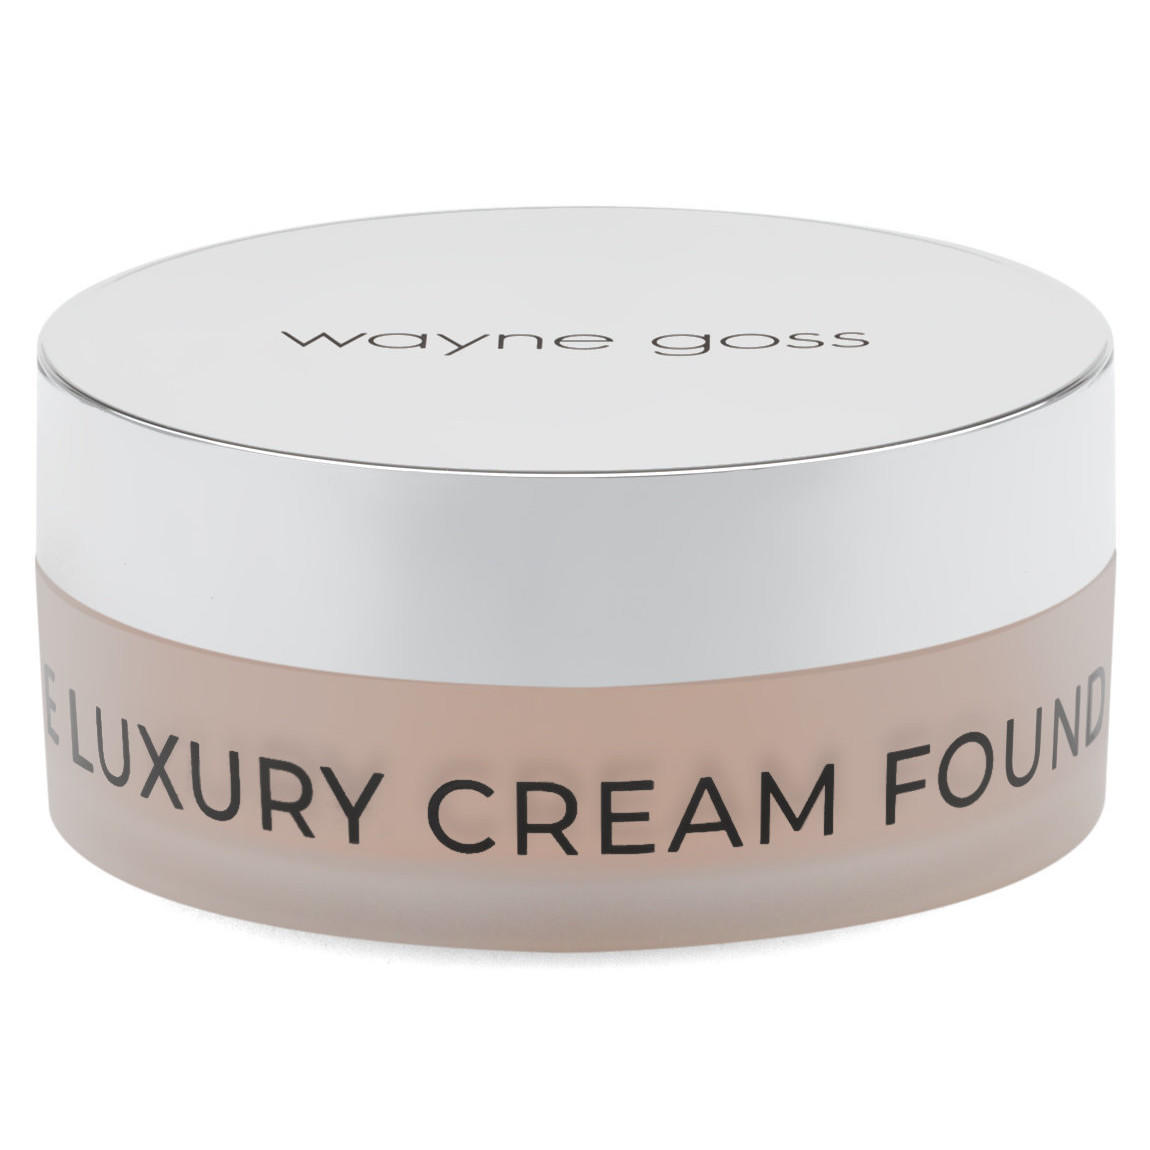 Wayne Goss The Luxury Cream Foundation Shade 11